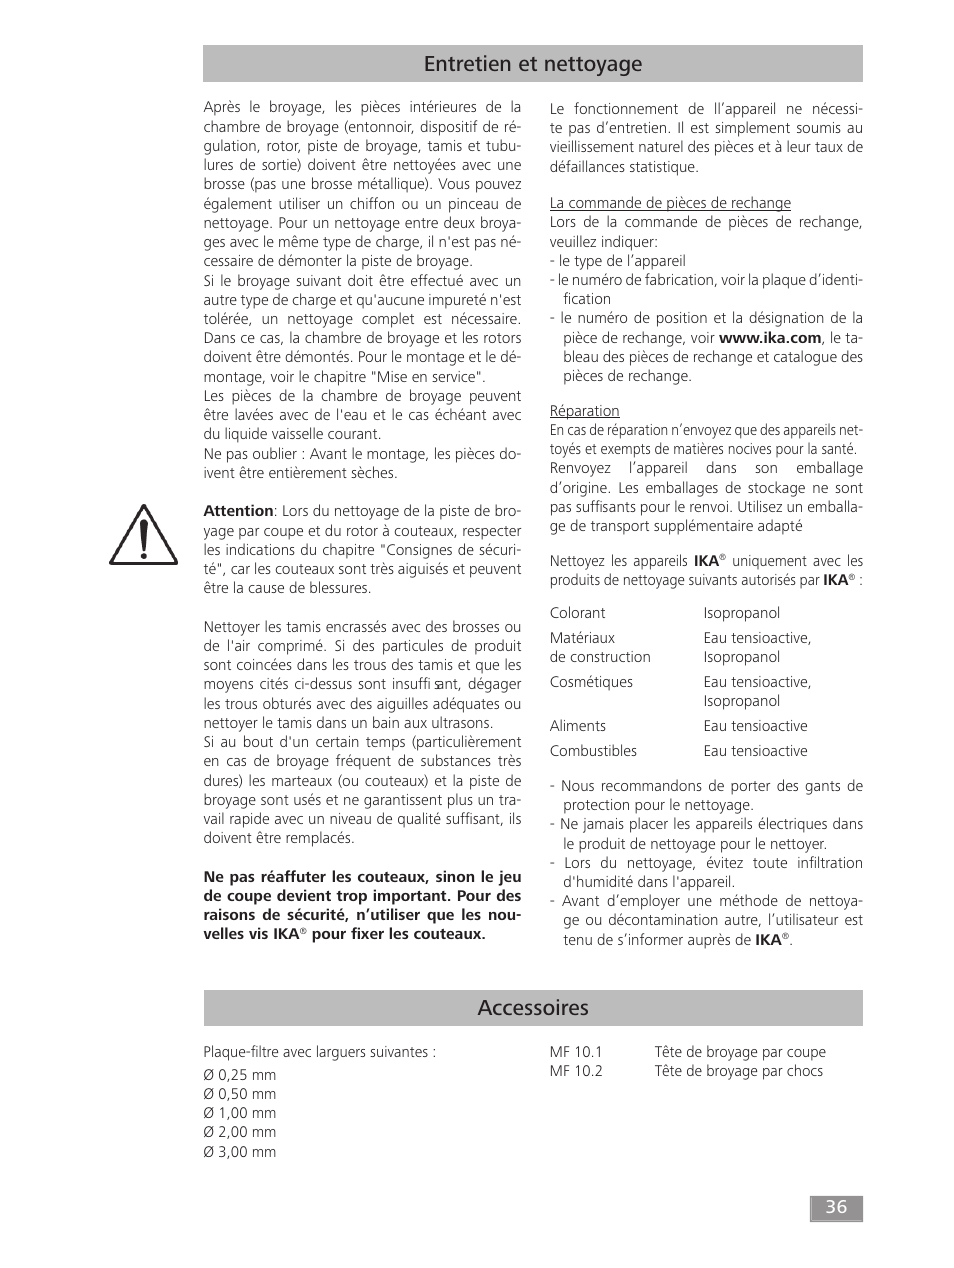 Accessoires, Entretien et nettoyage | IKA MF 10 basic User Manual | Page 36 / 140